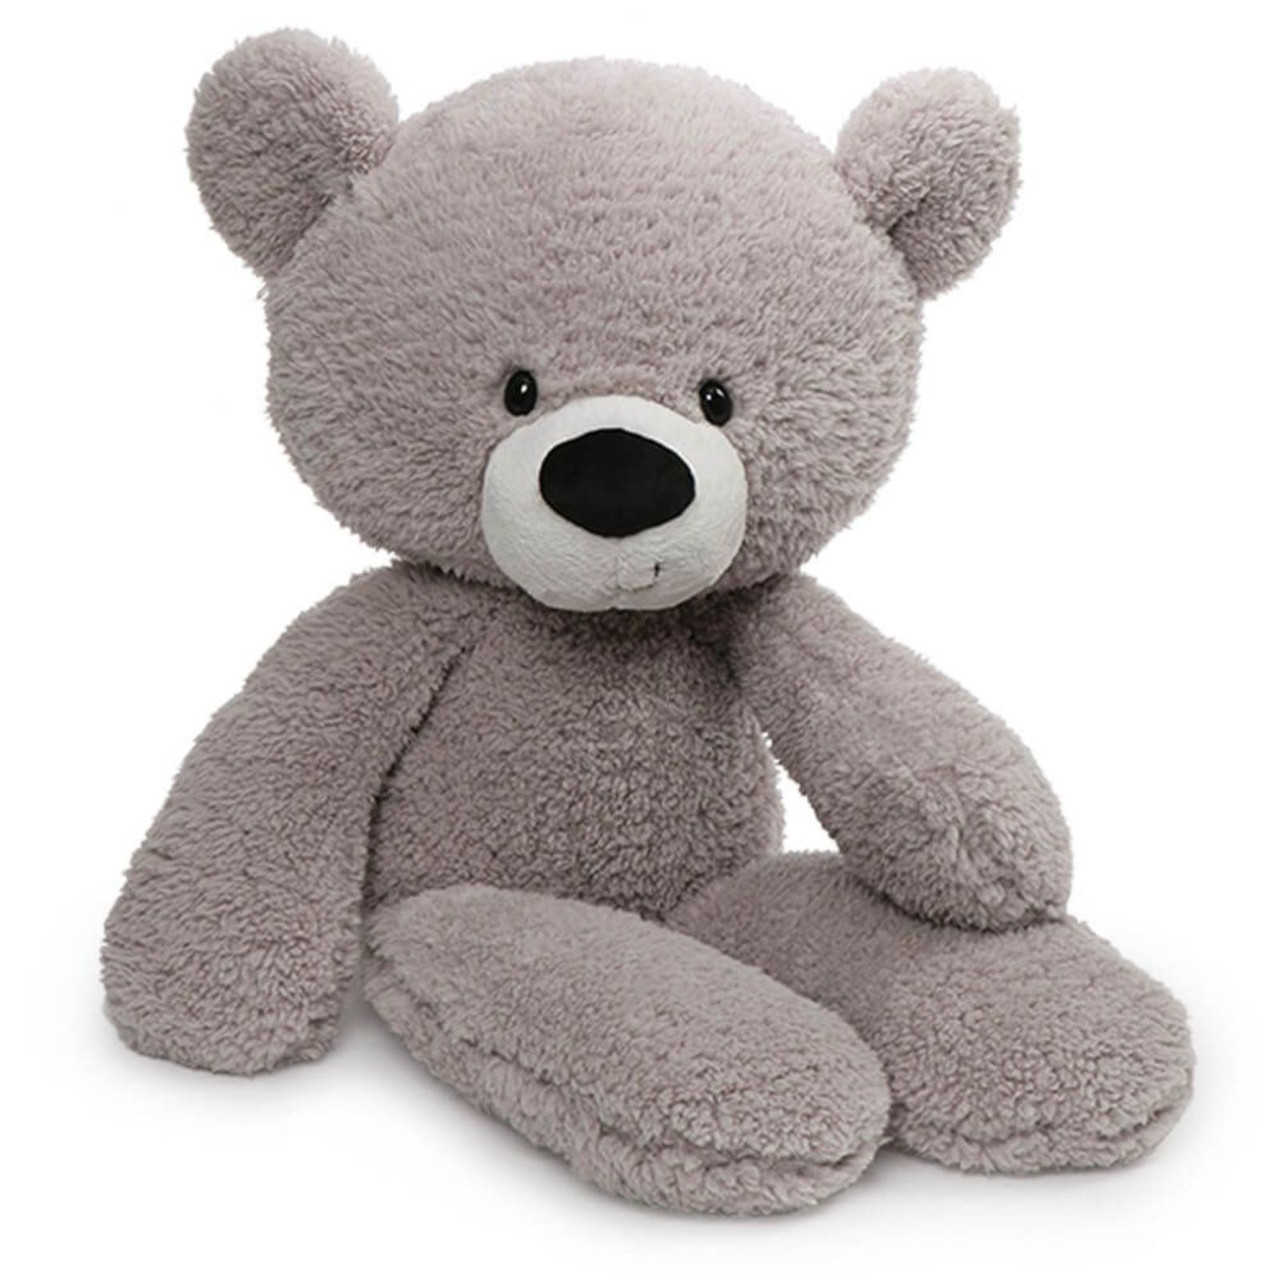 Gund Fuzzy Extra Large Plush Teddy Bear : Grey 61cm. Shop Toys Online